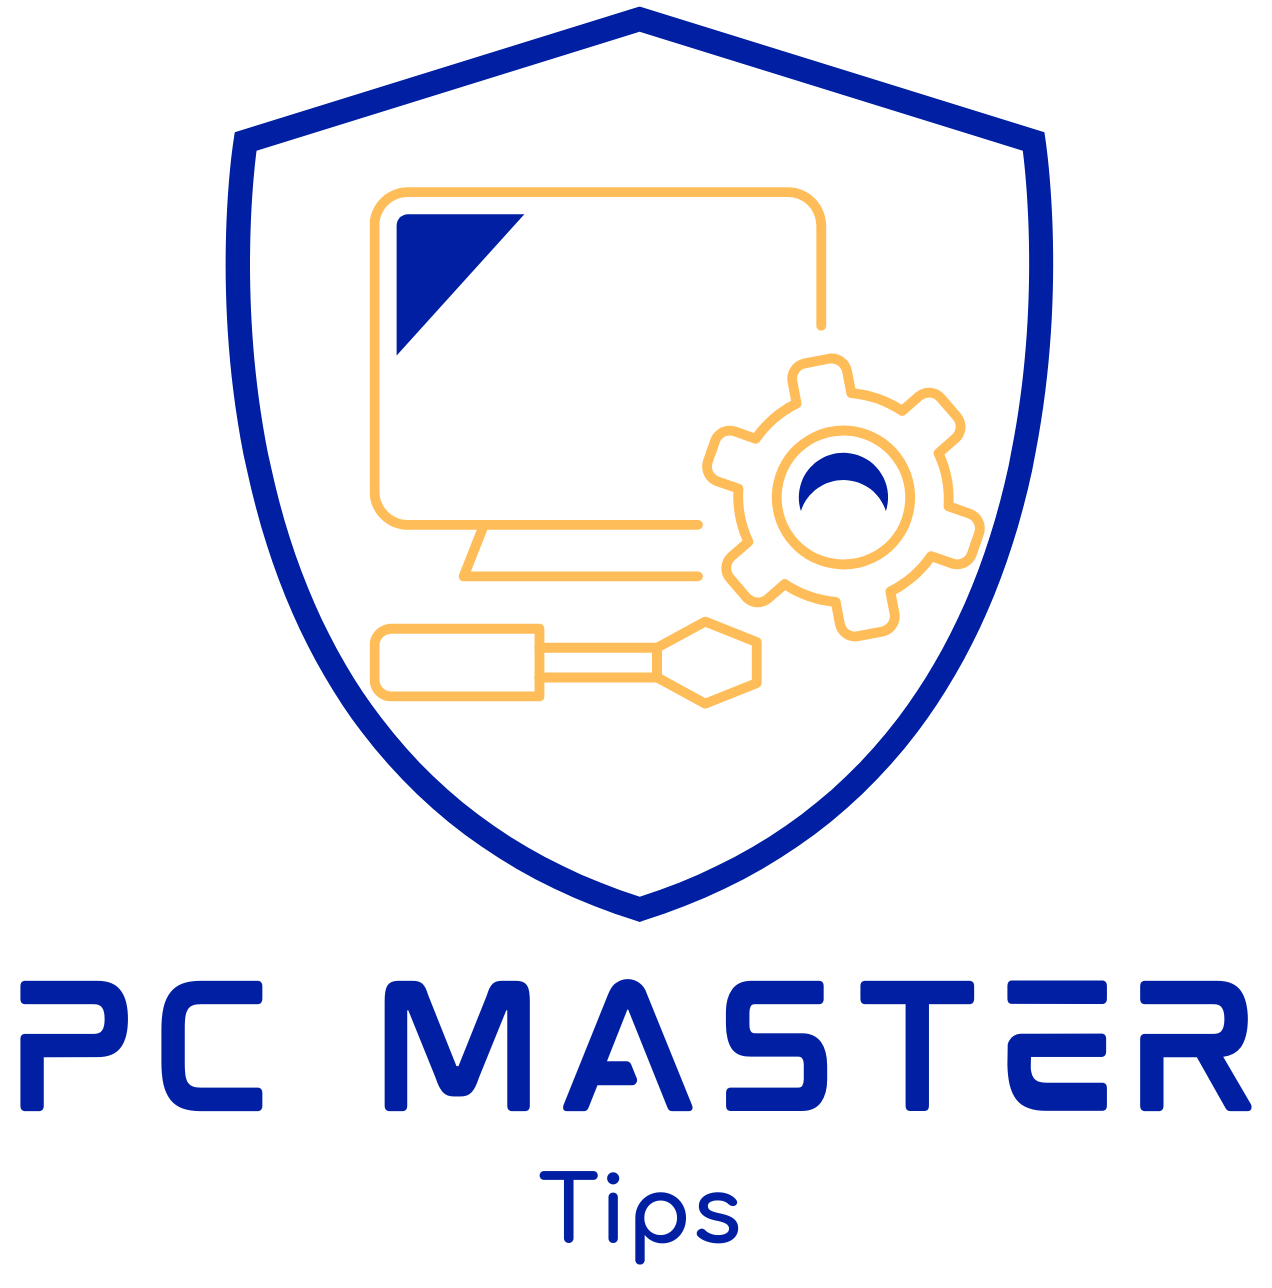 Pc Master Tips